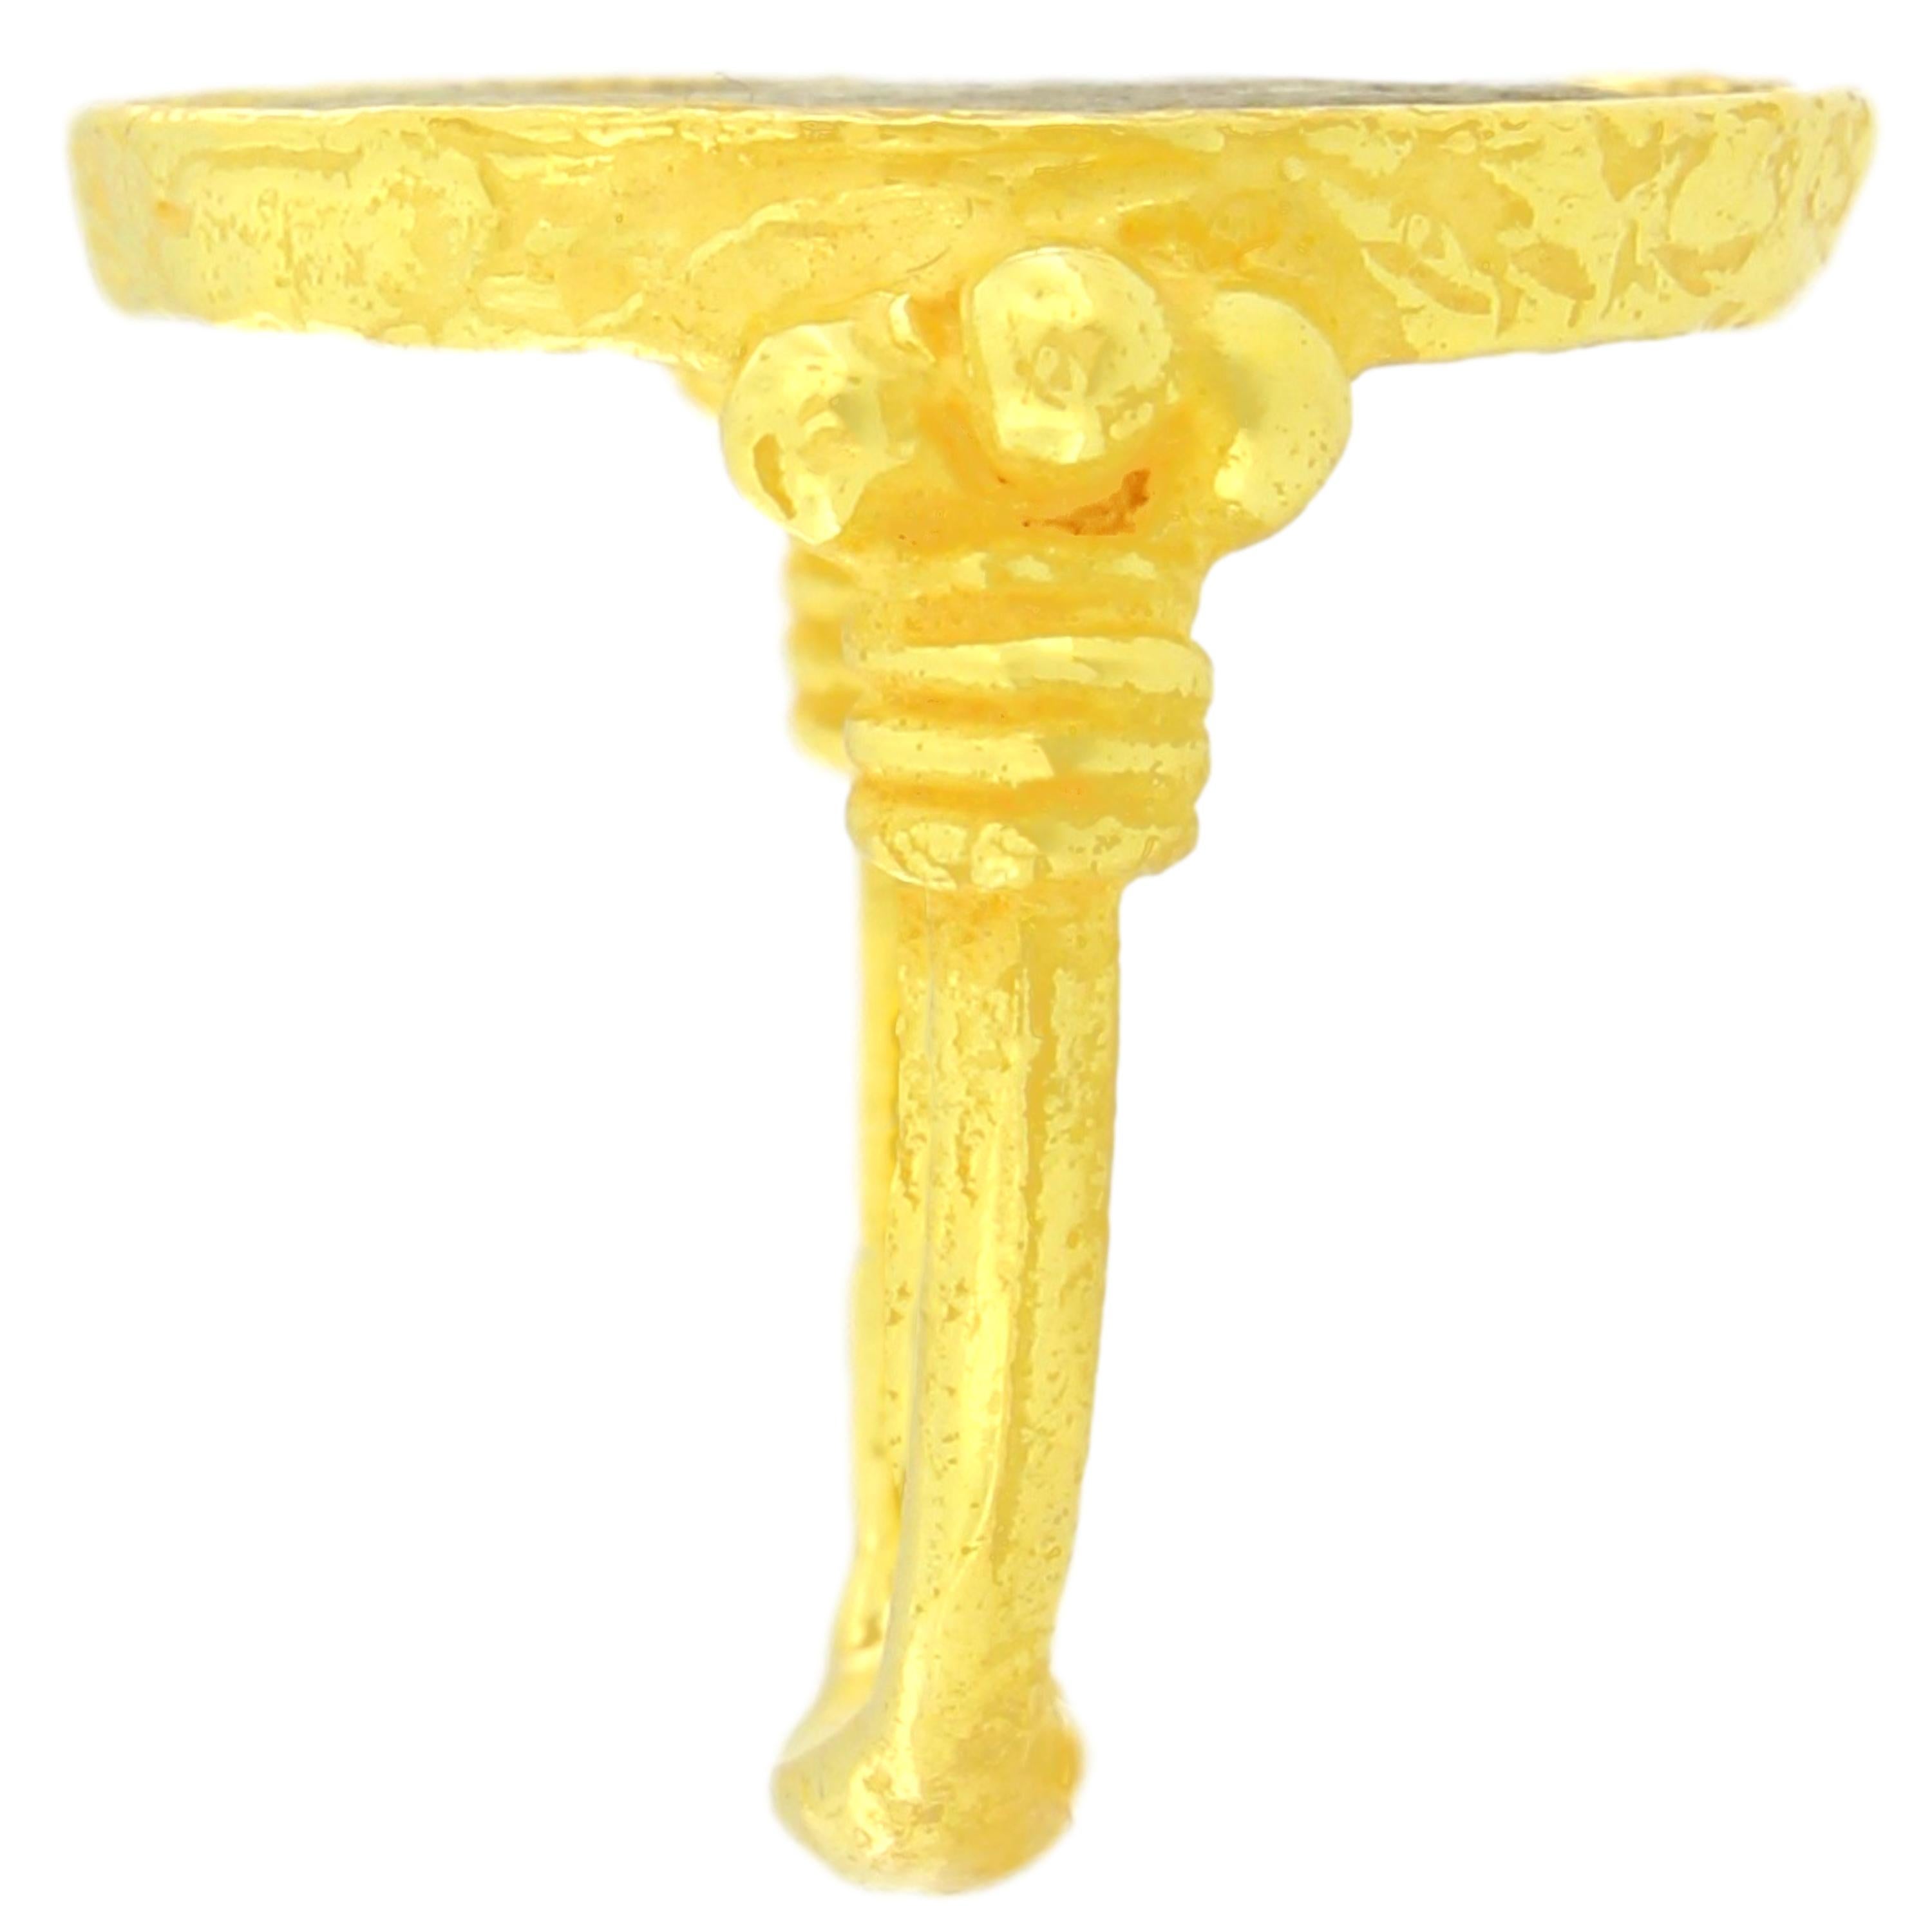 Sacchi Antique Roman Coin Ring 18 Karat Yellow Gold For Sale 1